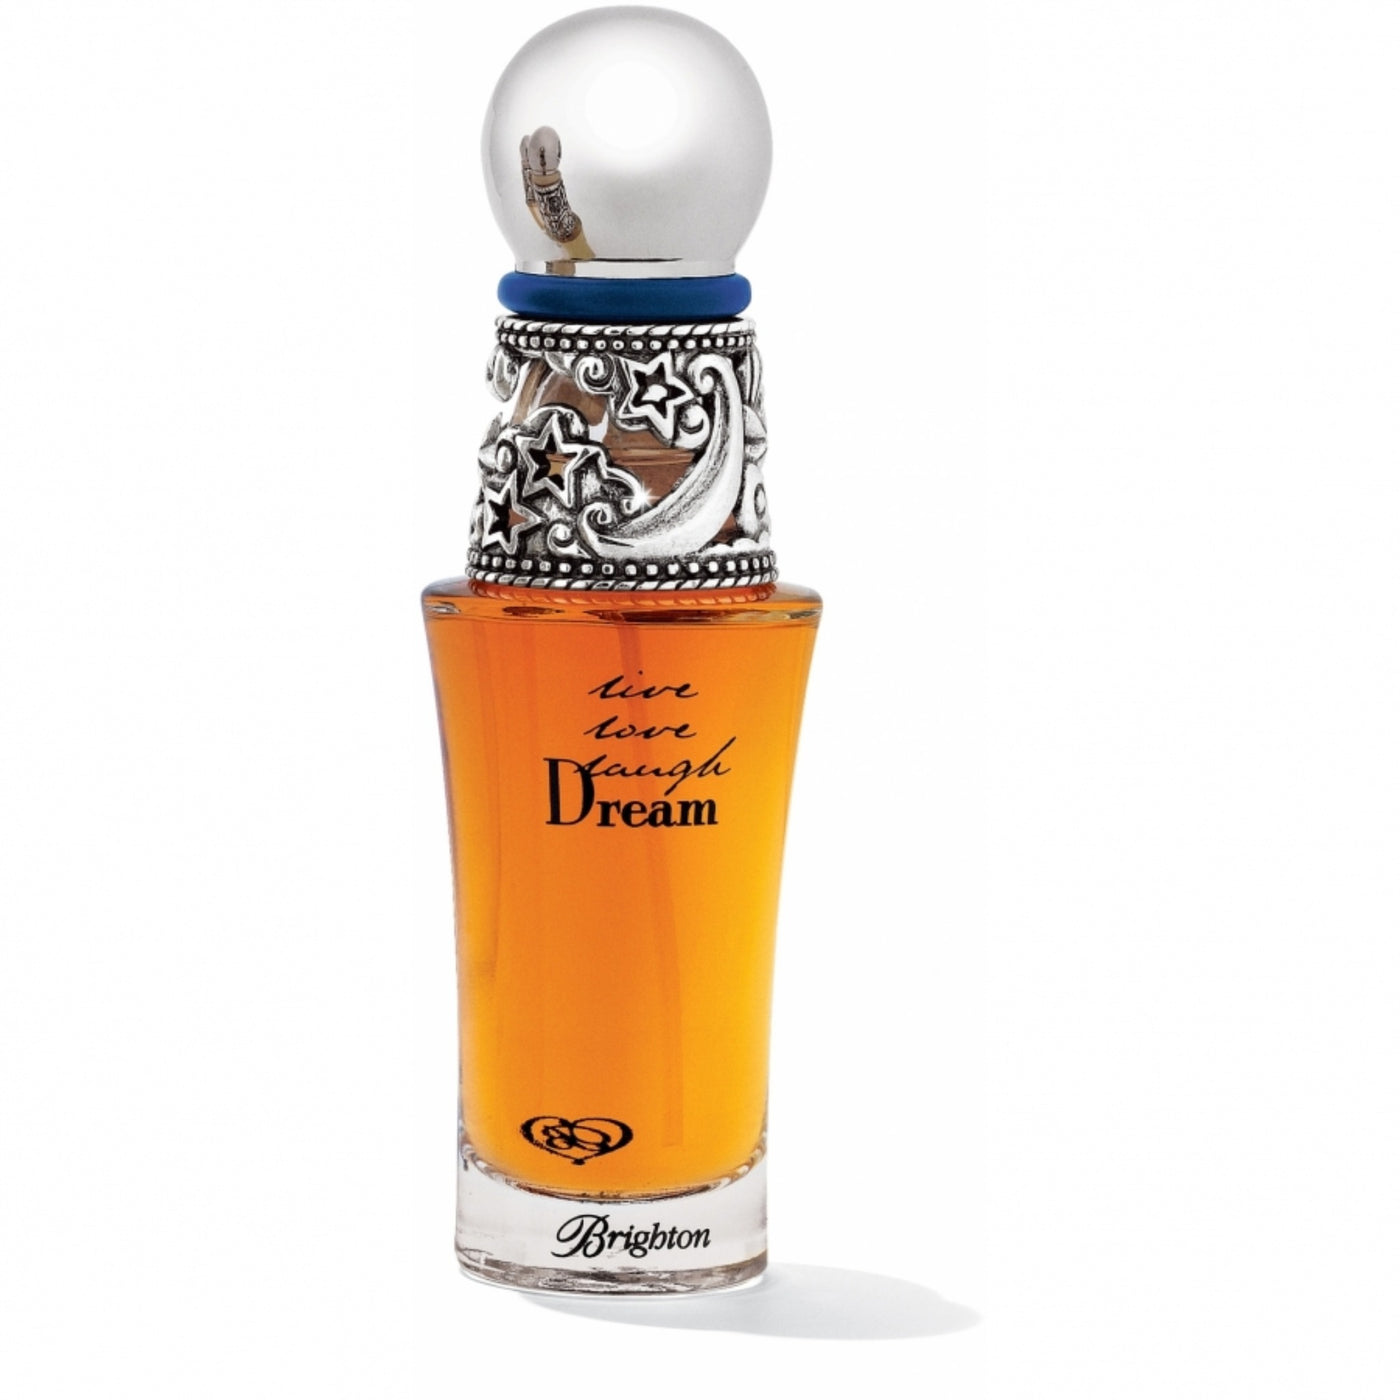 Dream Eau De Parfum